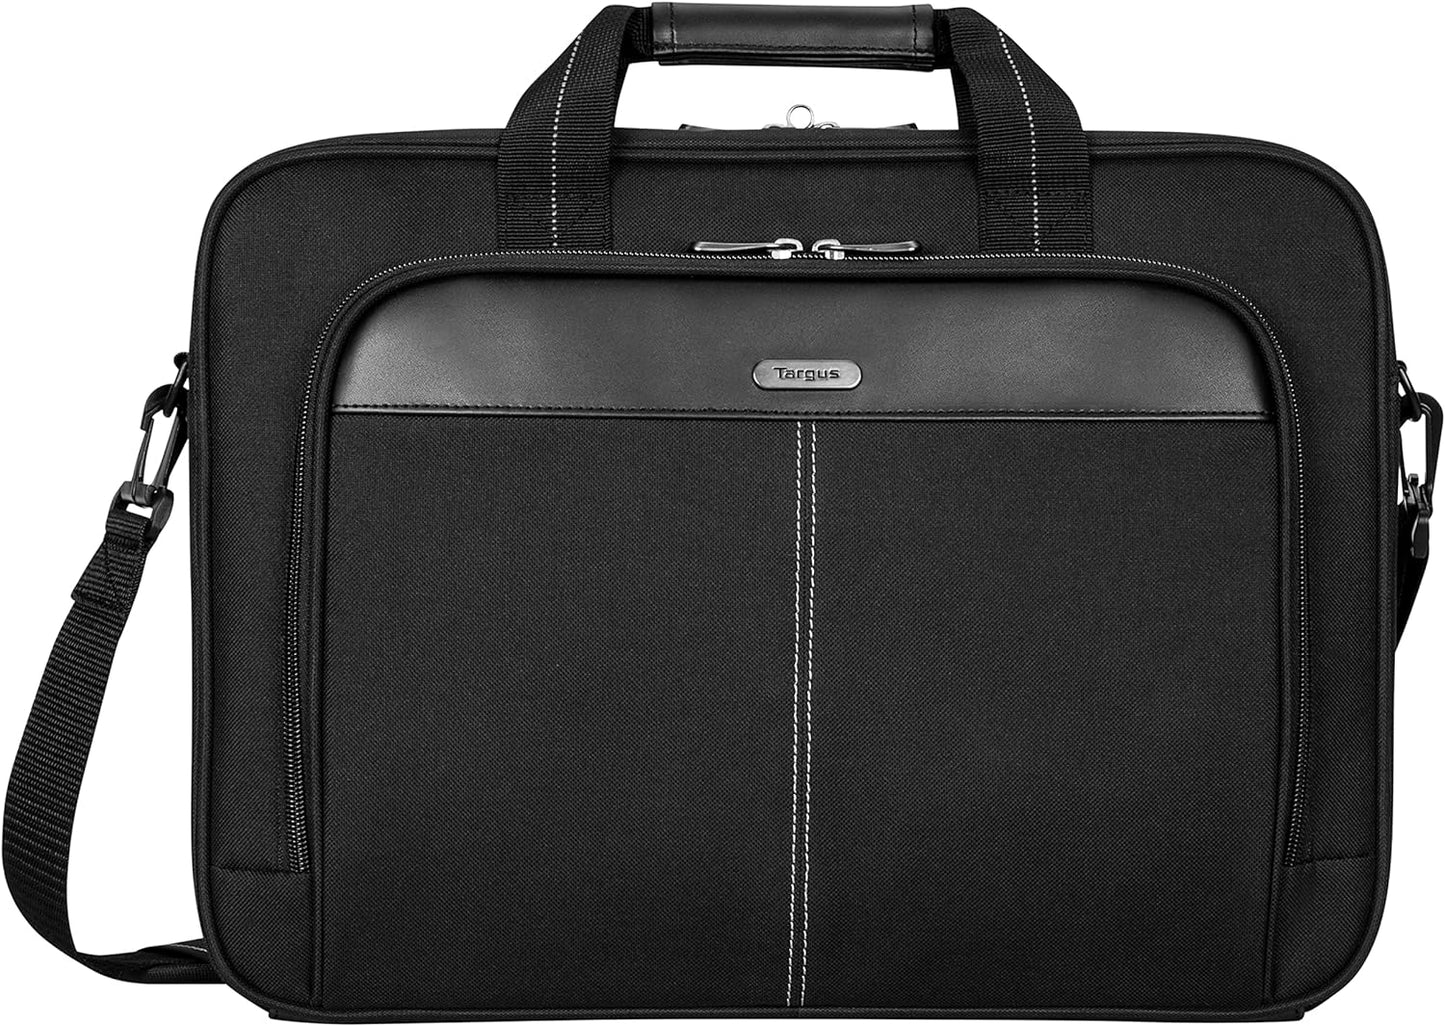 Targus Laptop Bag Classic Slim Briefcase Messenger Bag